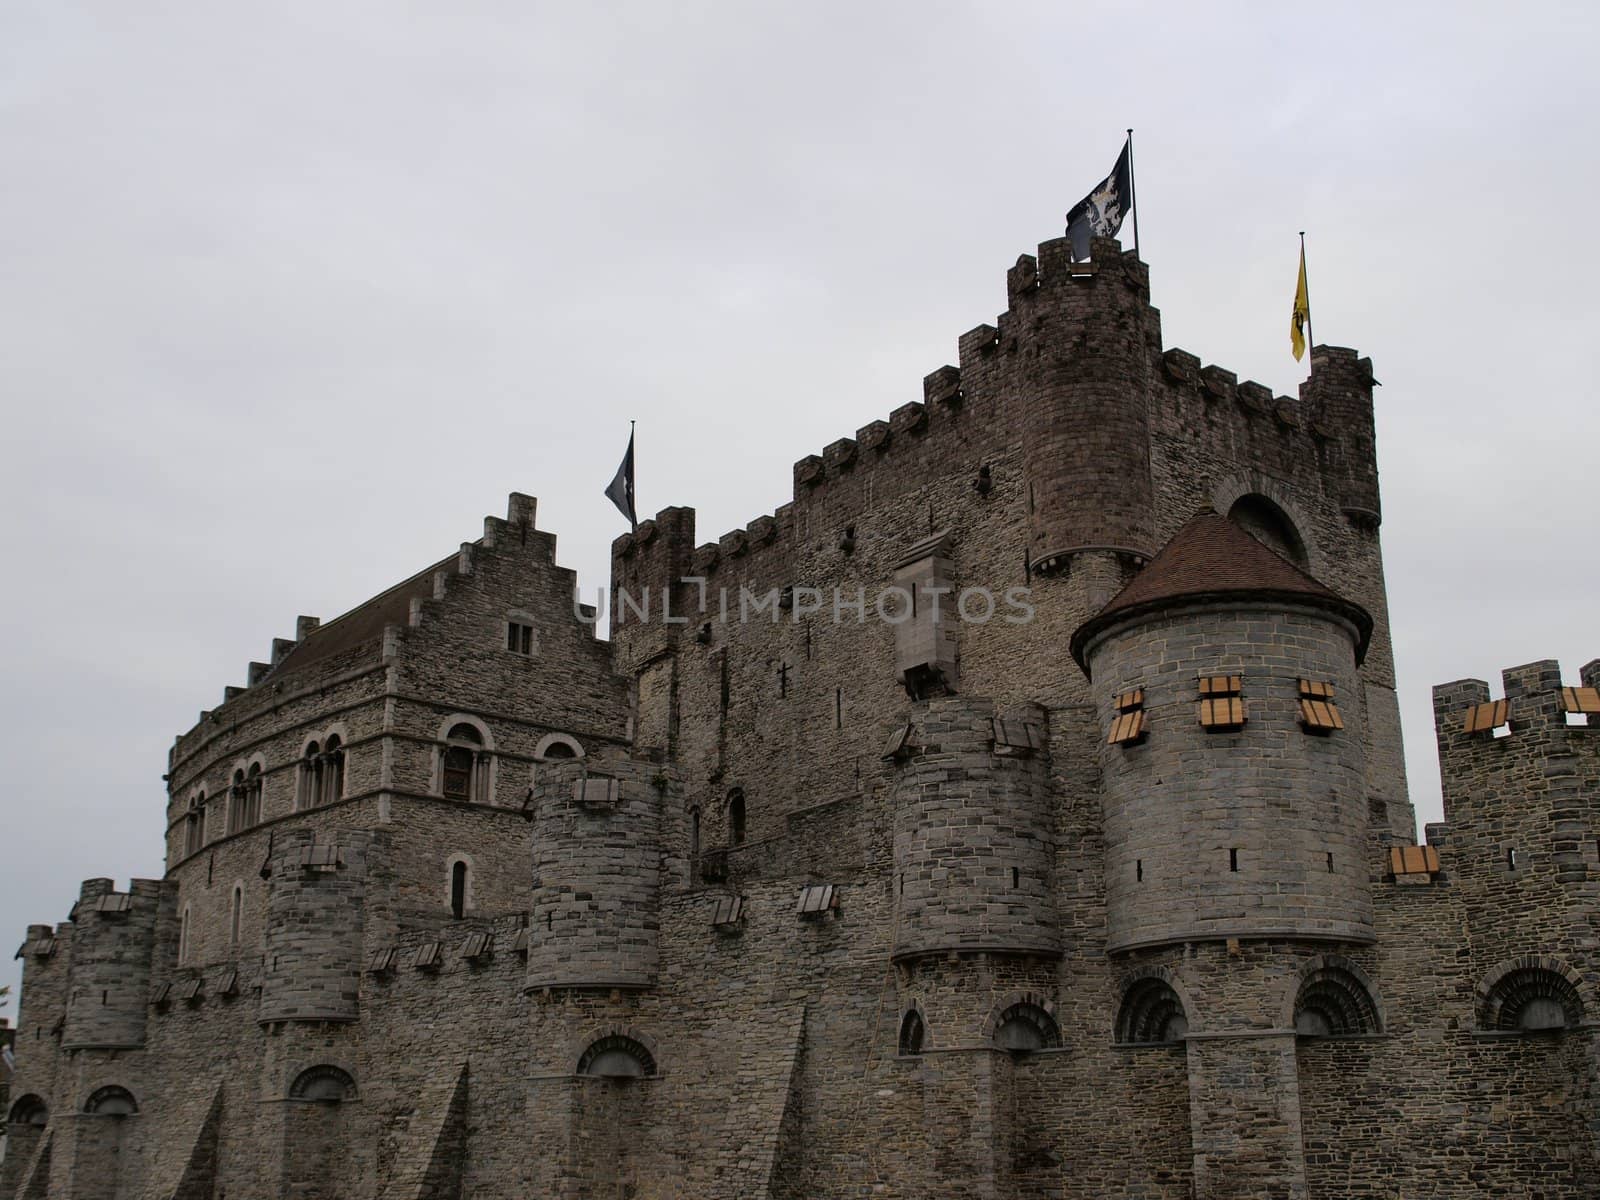 Impressive medieval castle